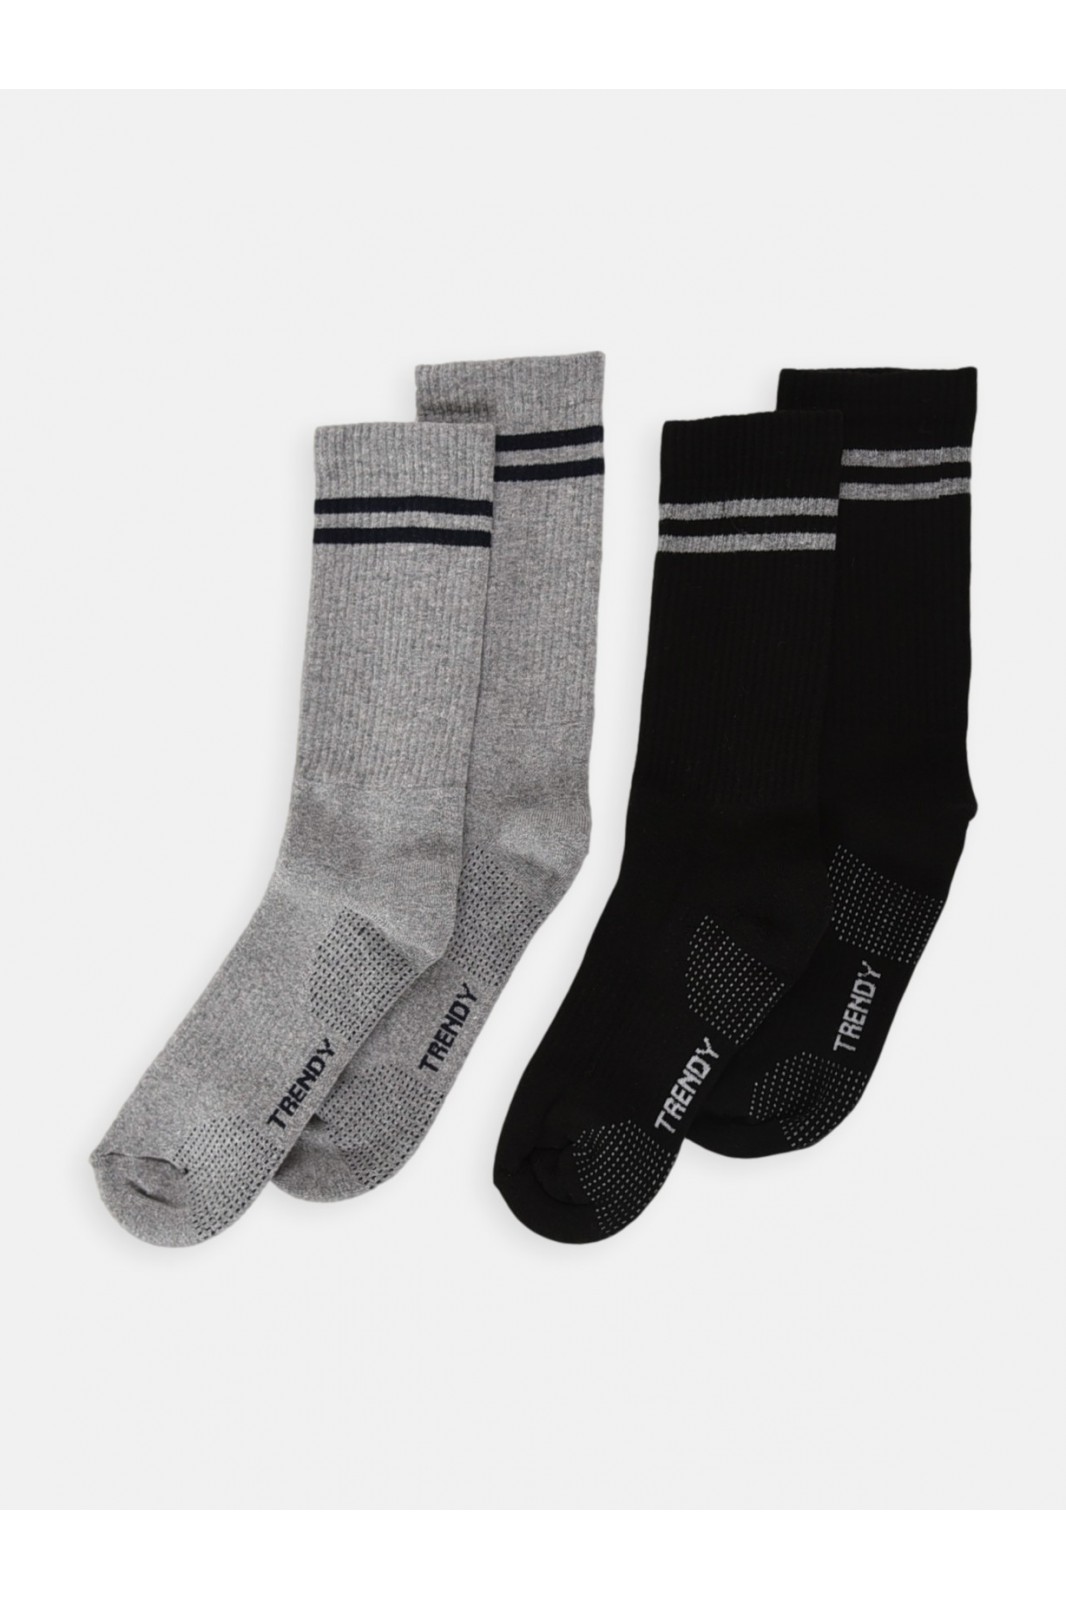 Sports socks TRENDY 2 Pack Grey and Black